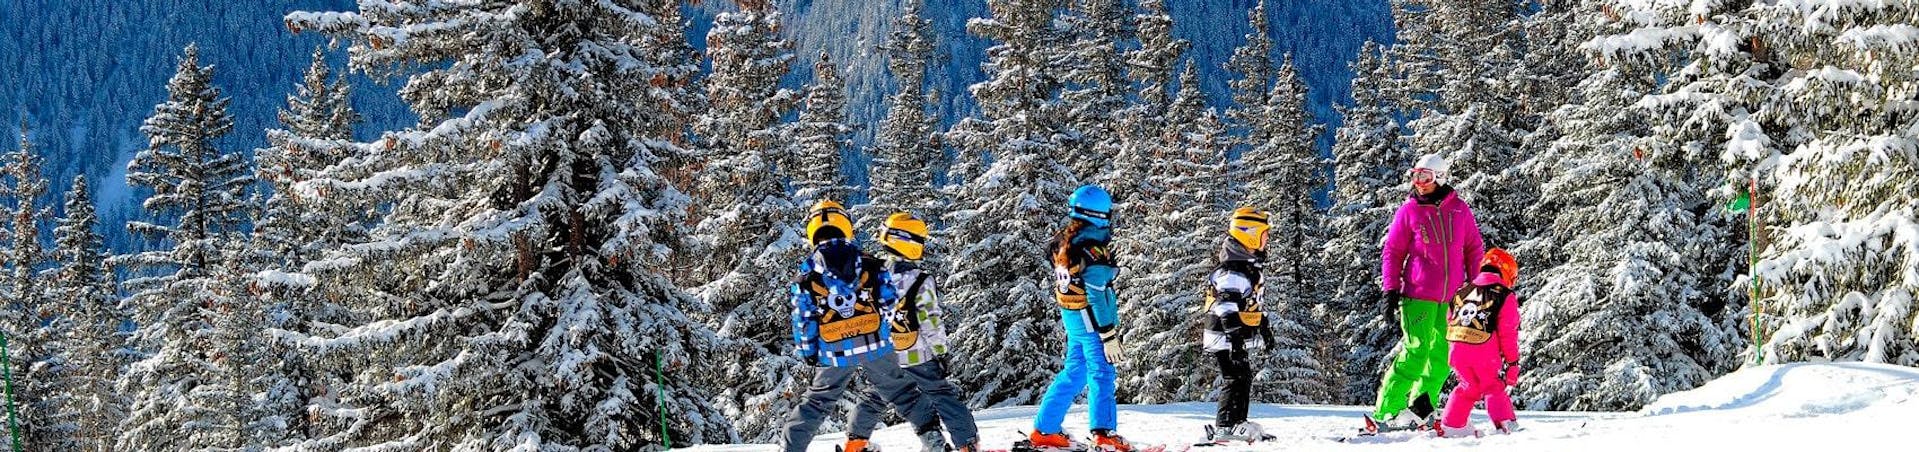 Privater Ski-Kurs für Kinder.